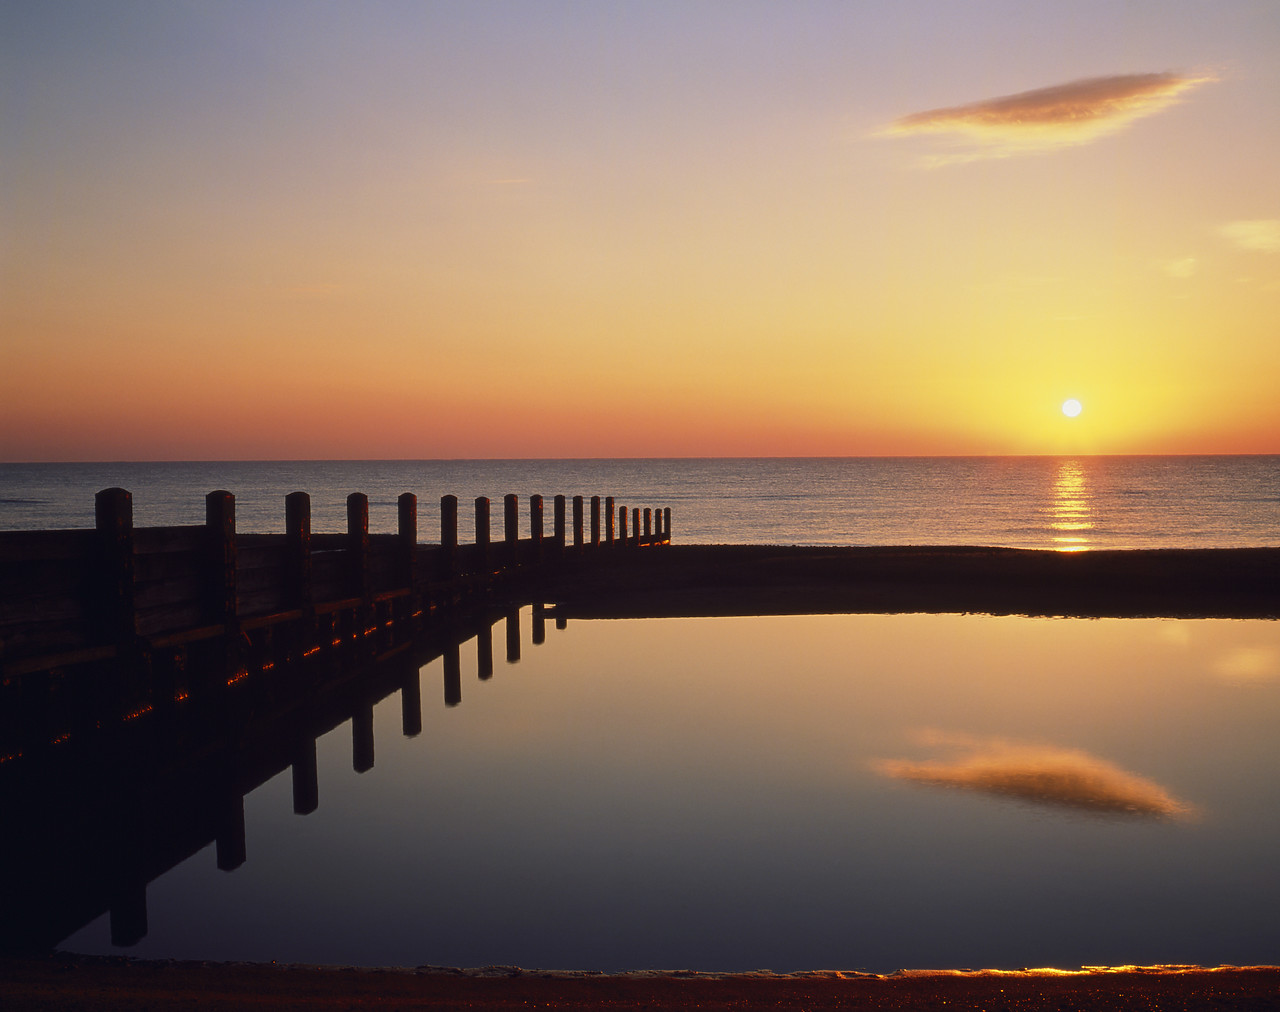 #913419-1 - Sunrise at Horsey Gap Beach, Norfolk, England